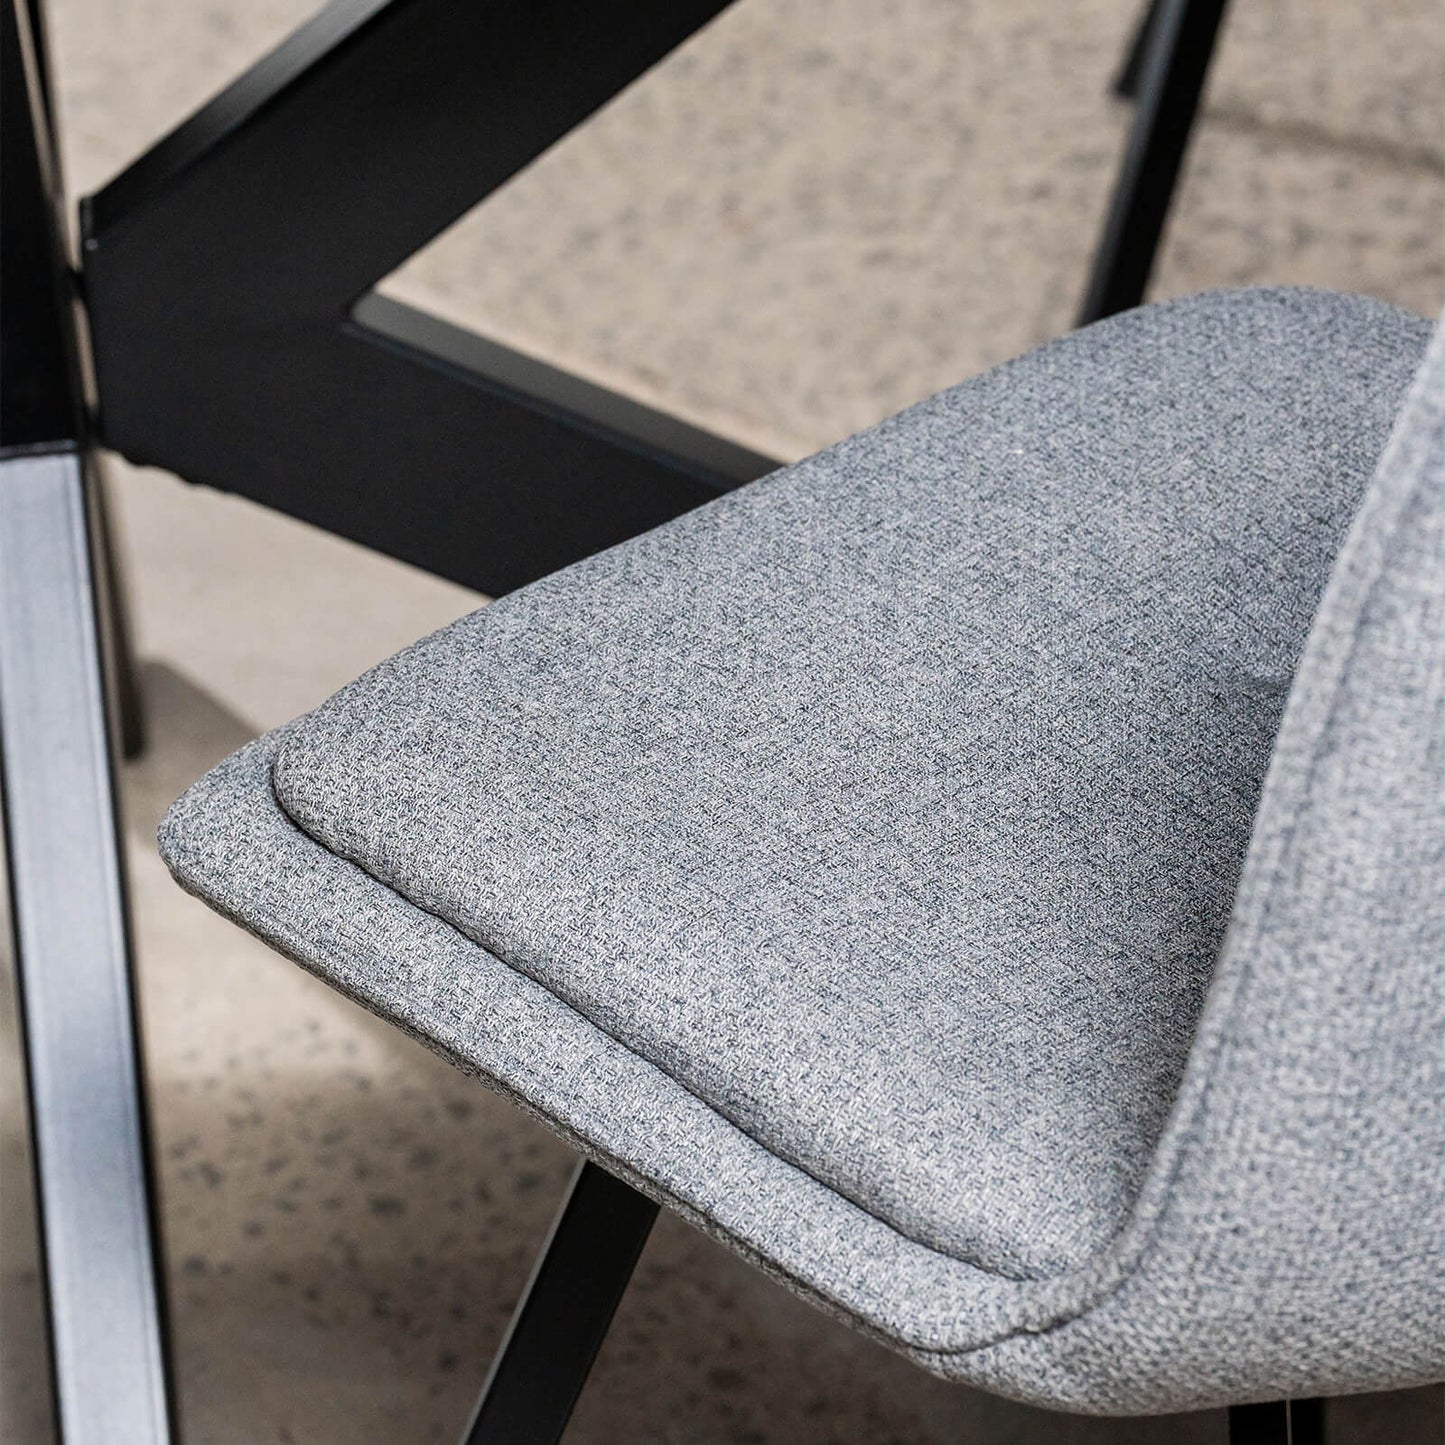 Maynard | Modern Grey Ivory Fabric Dining Chairs | Set Of 2 | Grey